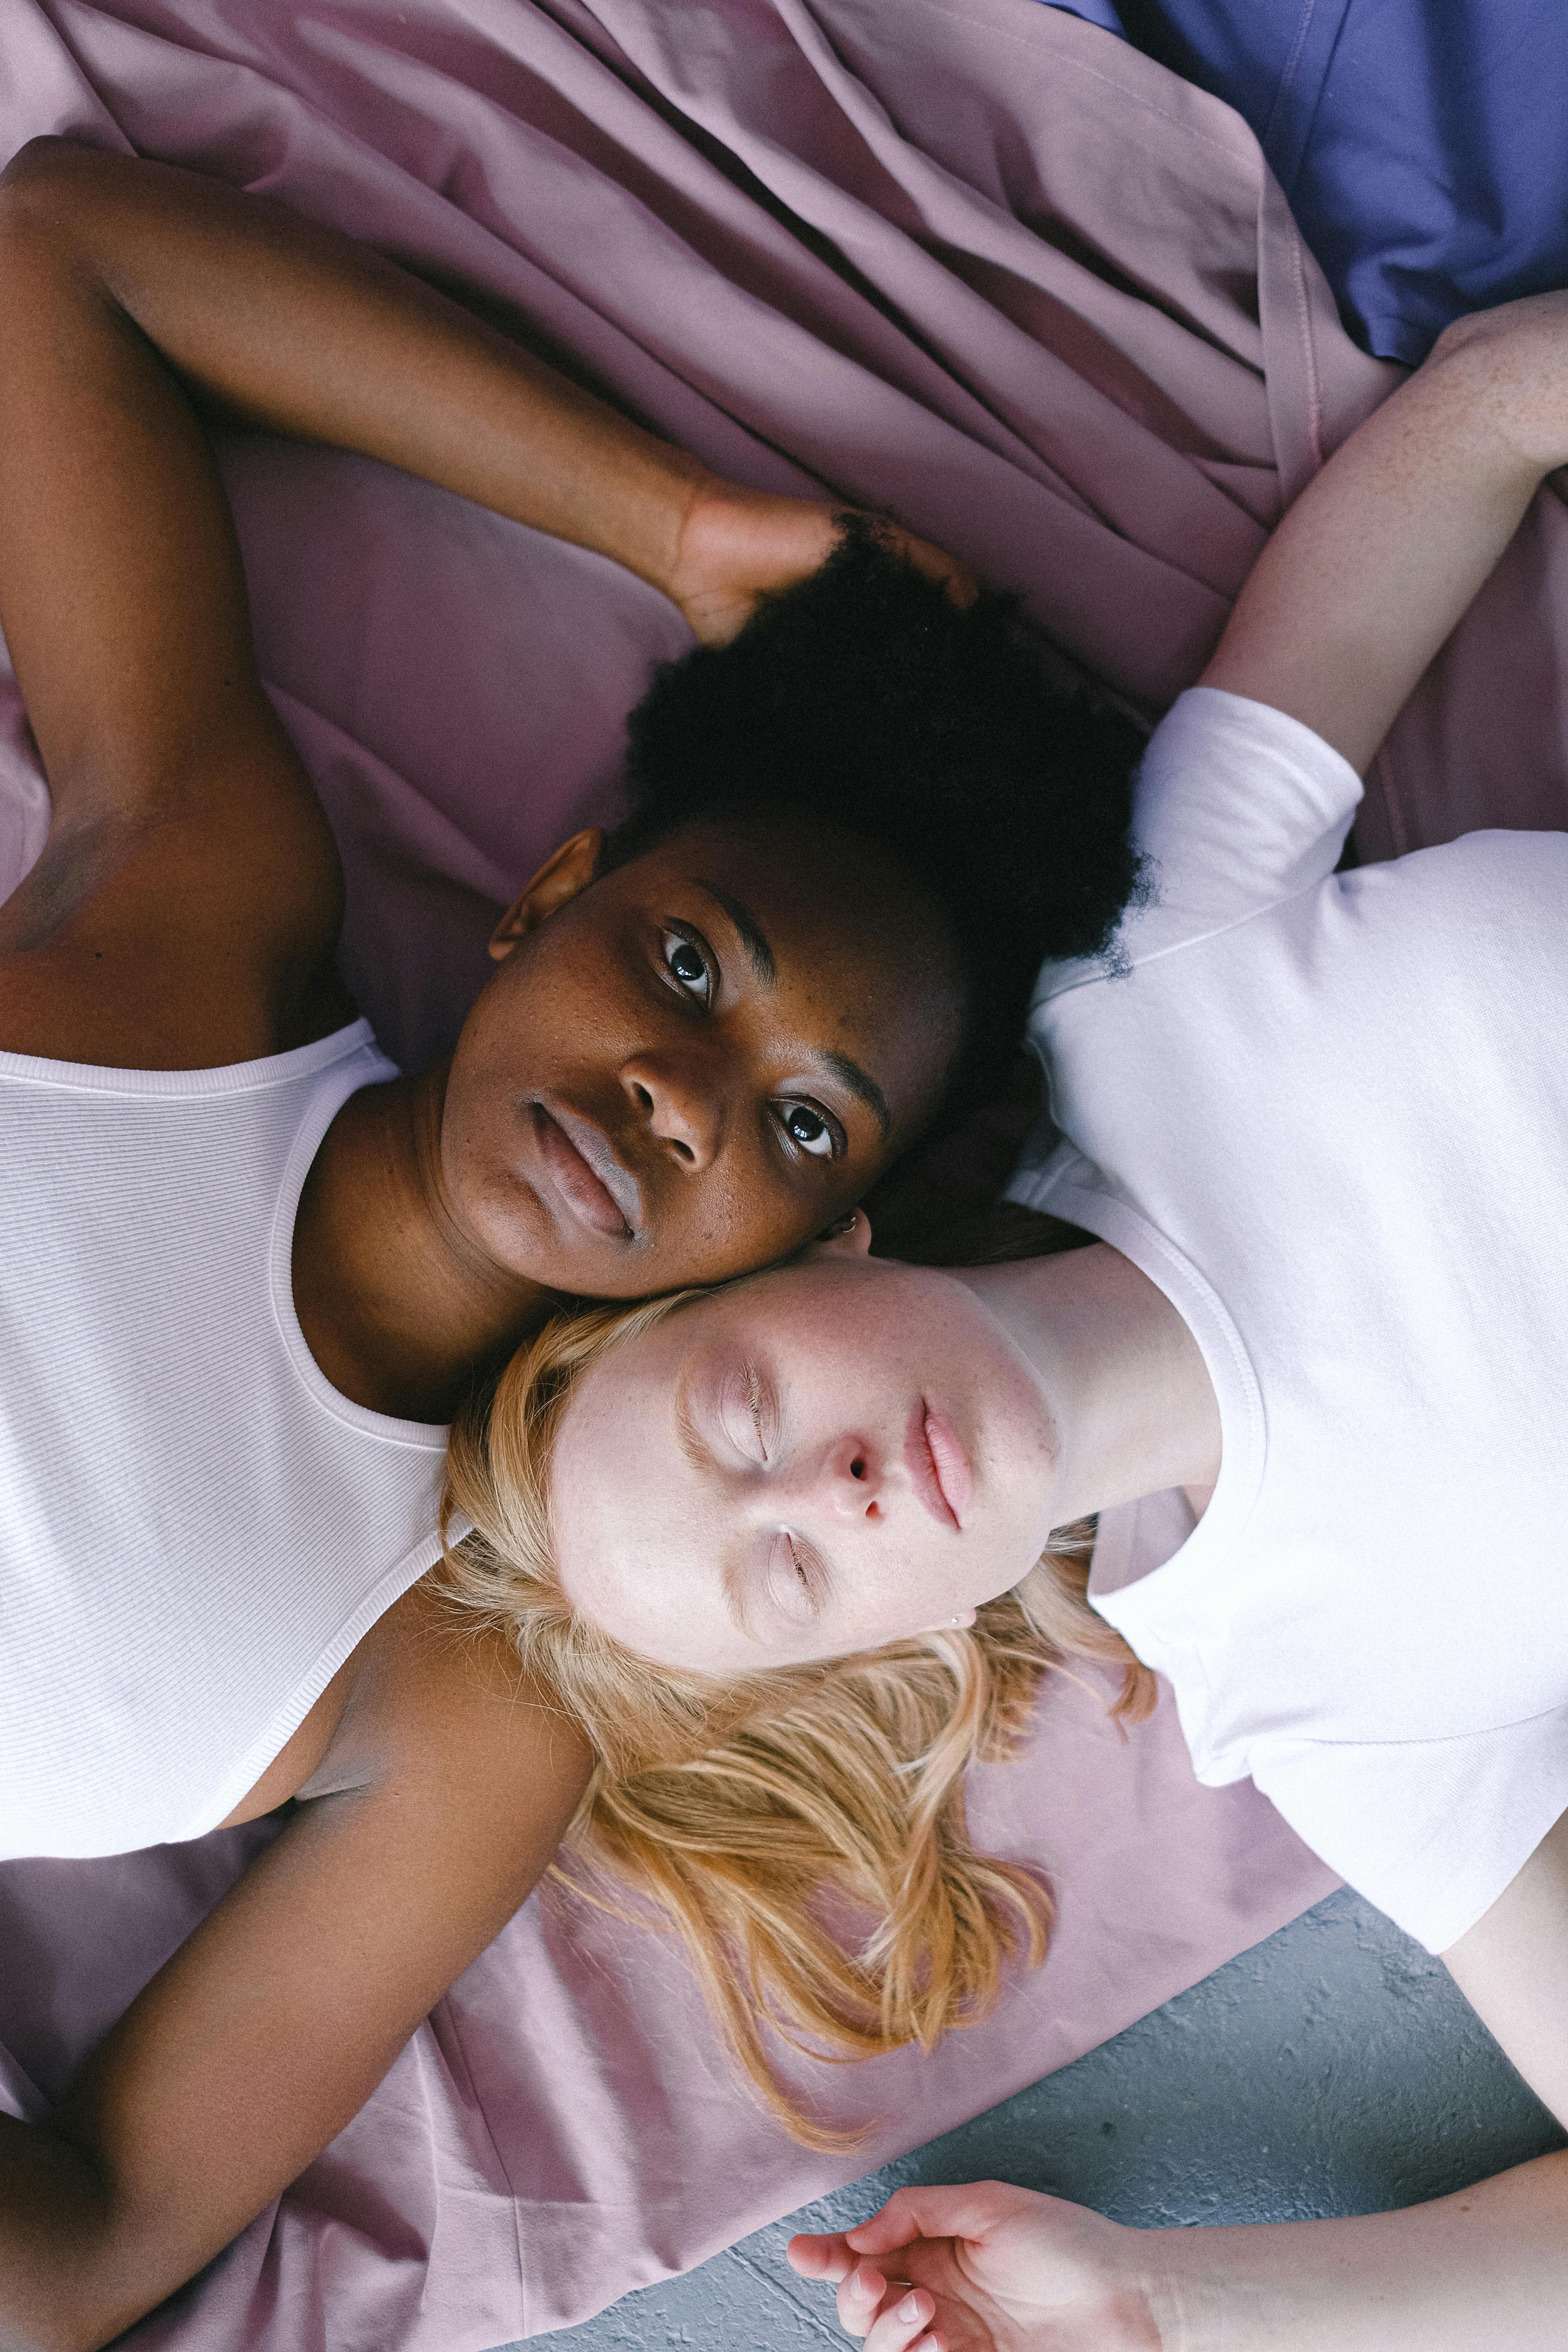 interracial women lying head to head in opposite directions